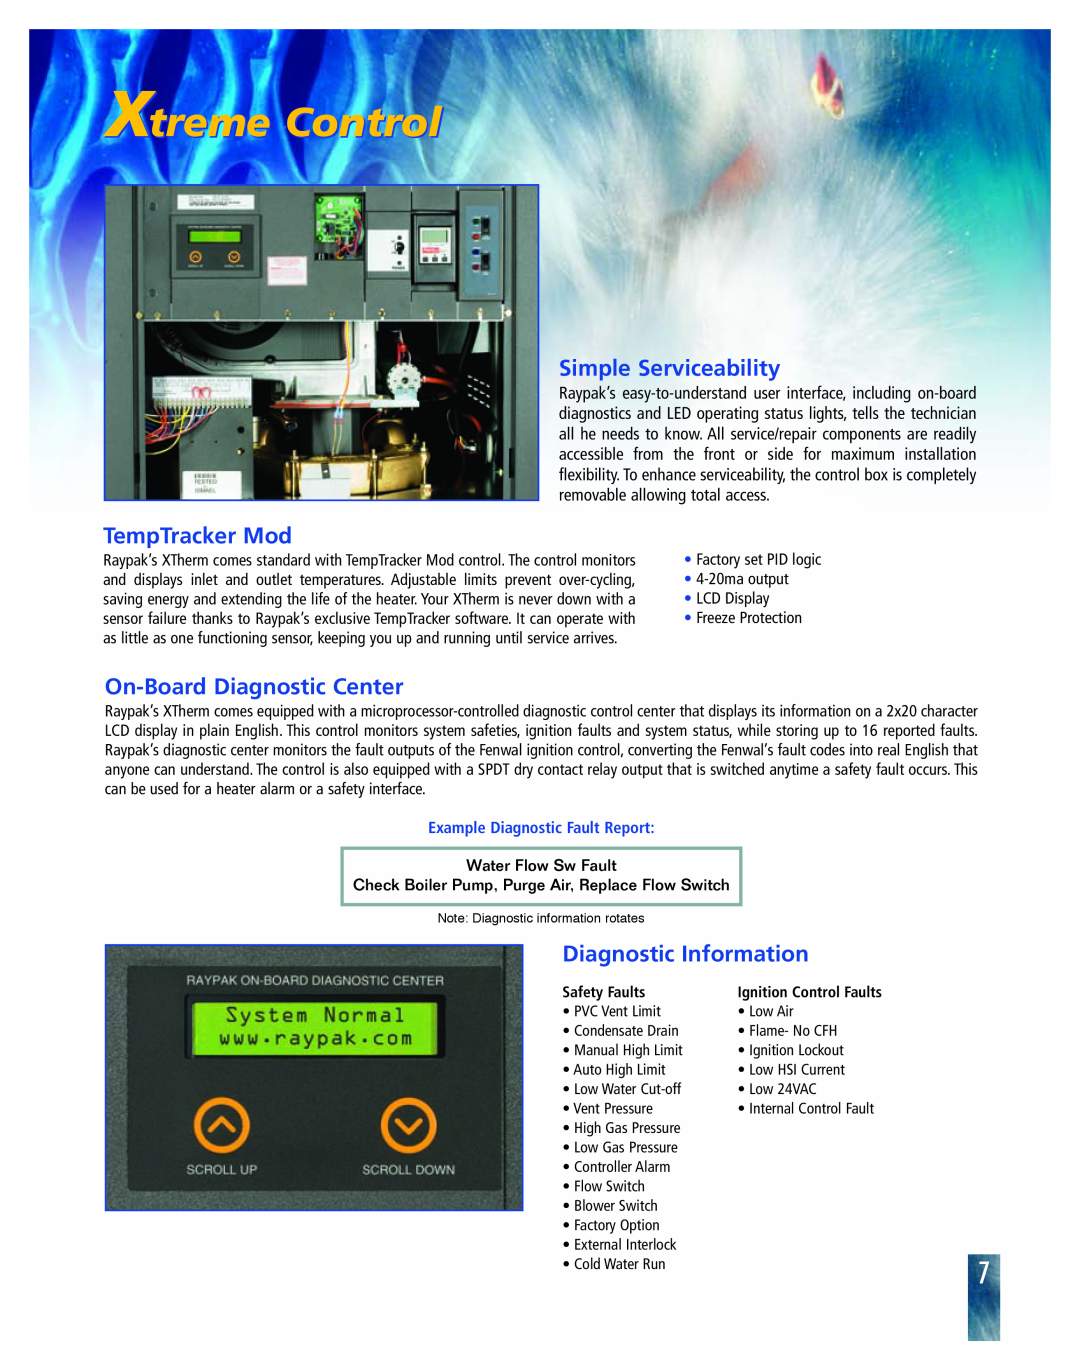 Raypak 2005 Xtreme Control, Simple Serviceability, TempTracker Mod, On-BoardDiagnostic Center, Diagnostic Information 